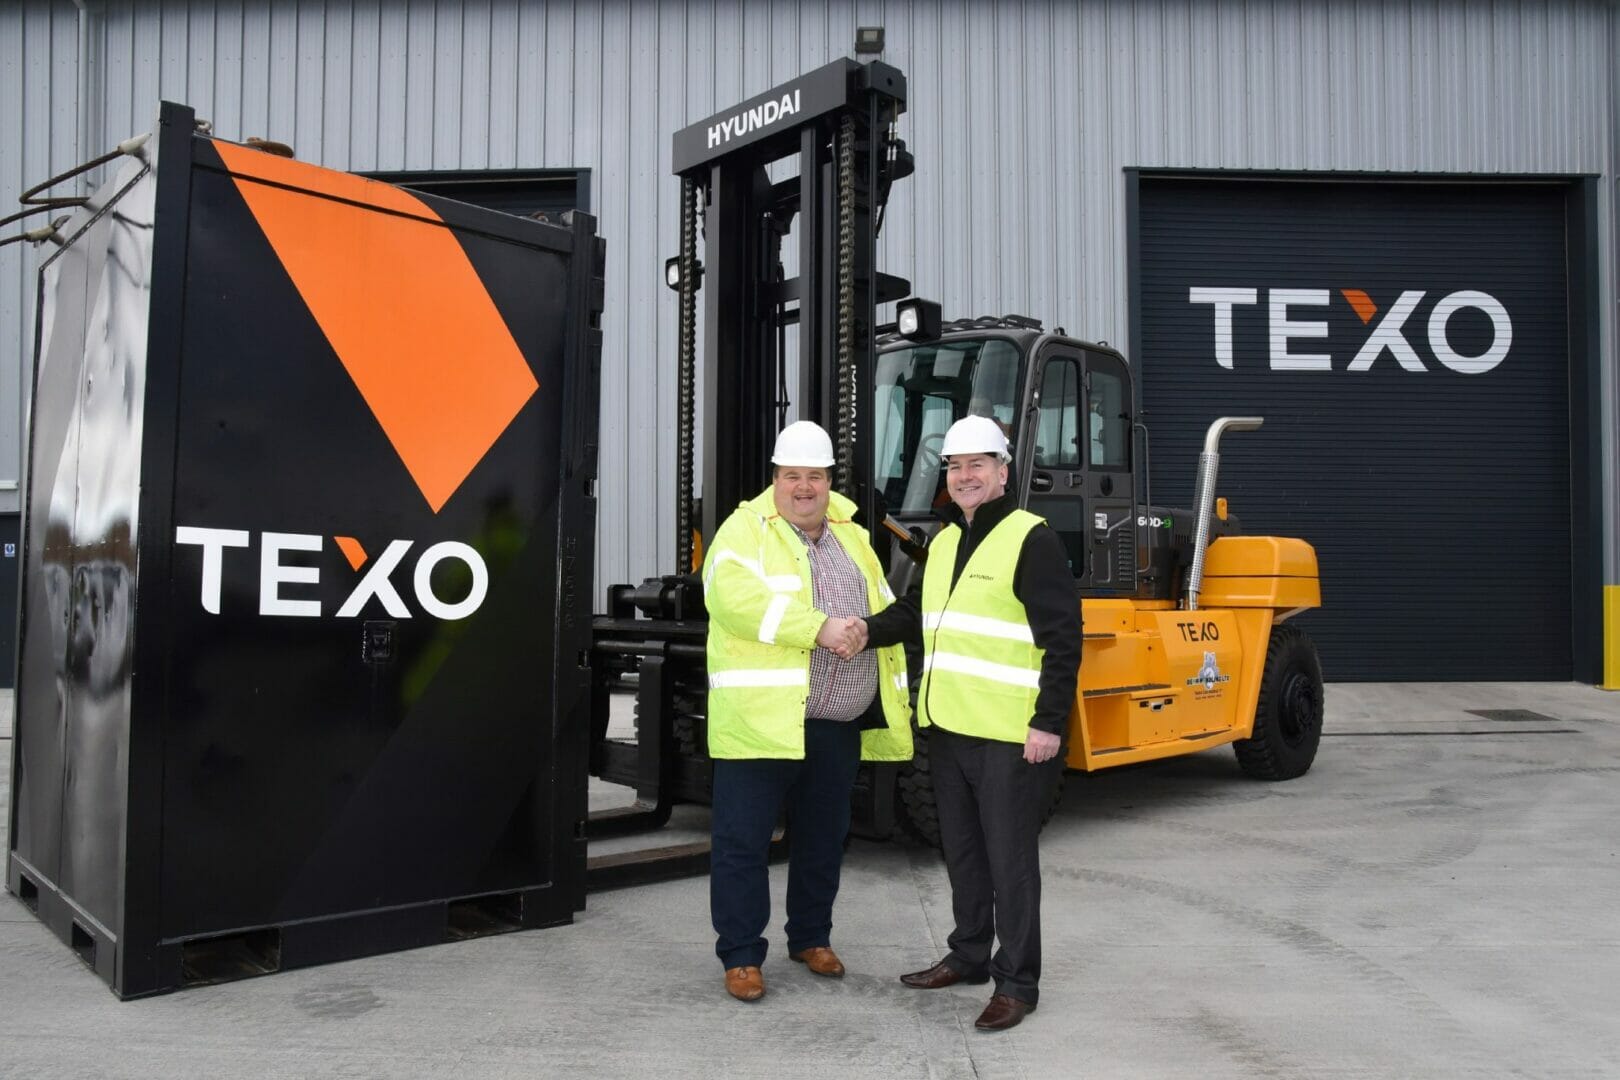 Bear Handling sign deal with engineering giant TEXO through Forklift supply @HyundaiCEE @BearHandlingLtd